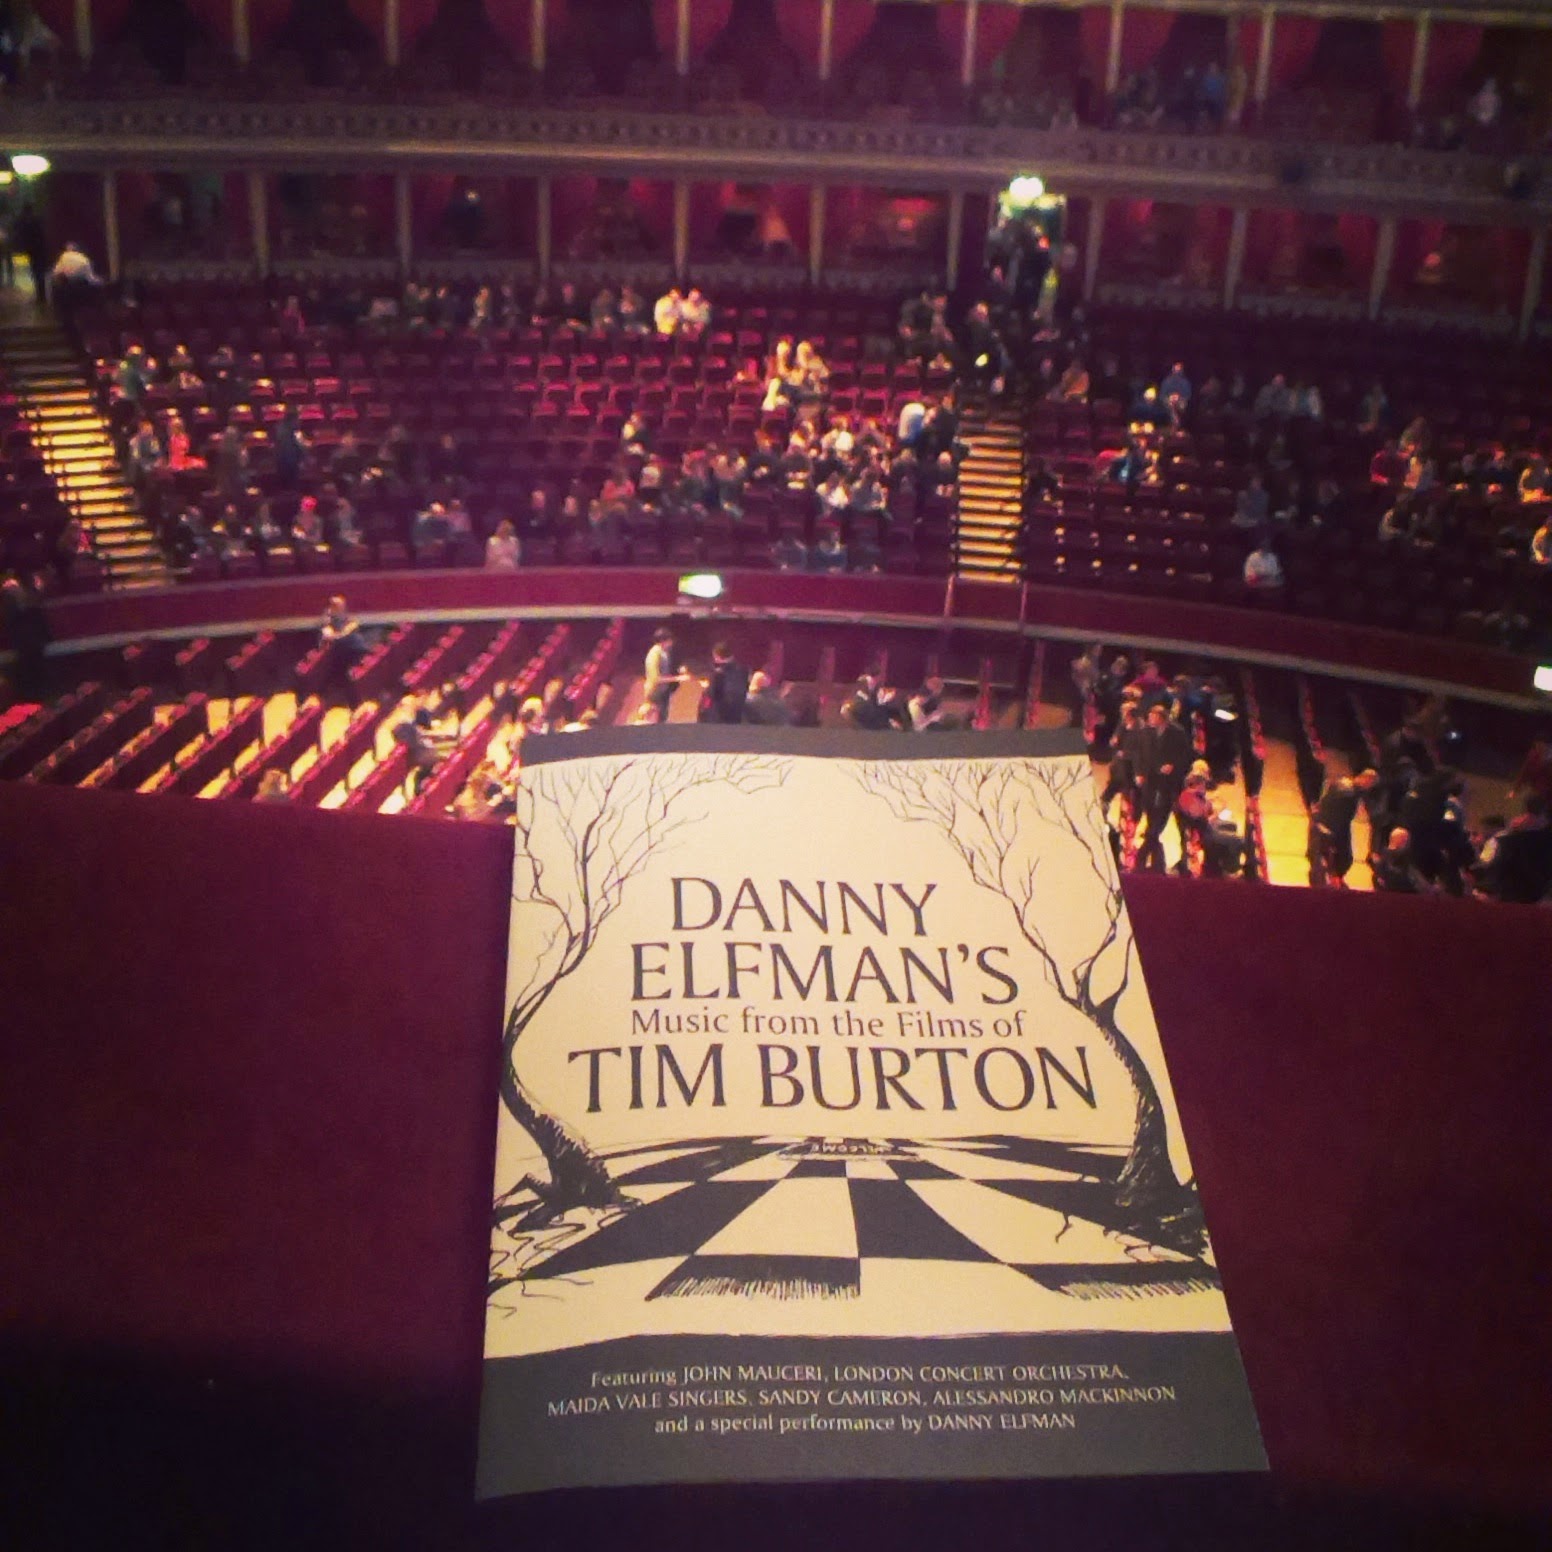 Royal Albert Hall - Danny Elfman's Music from the films of Tim Burton